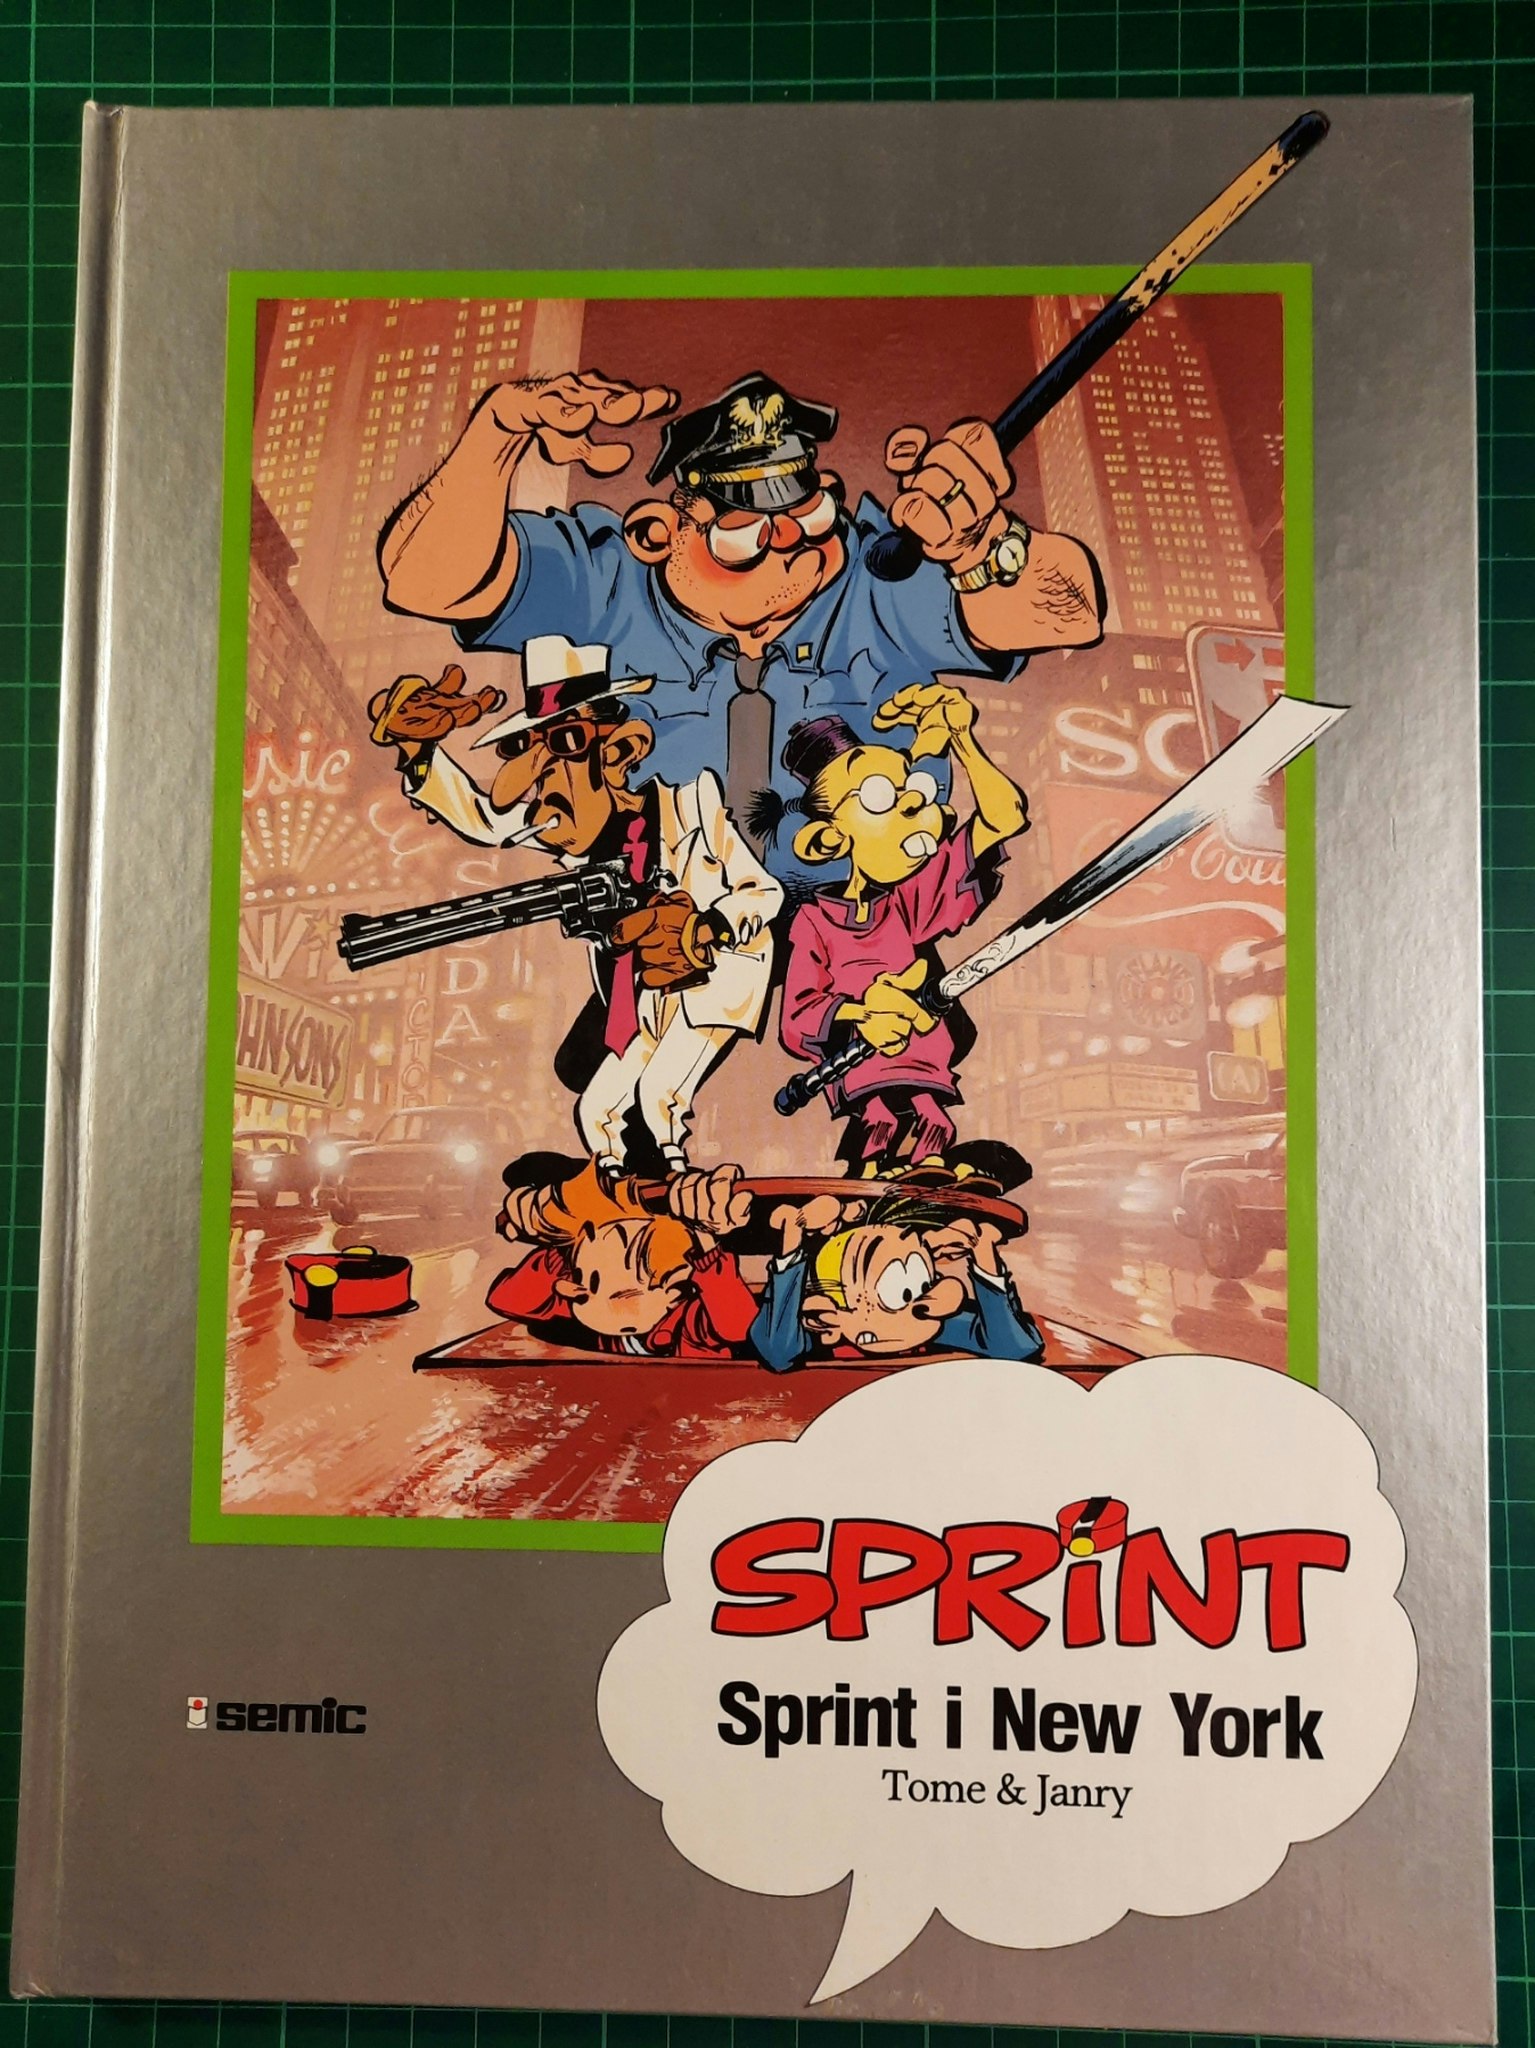 Sprint - Sprint i New York